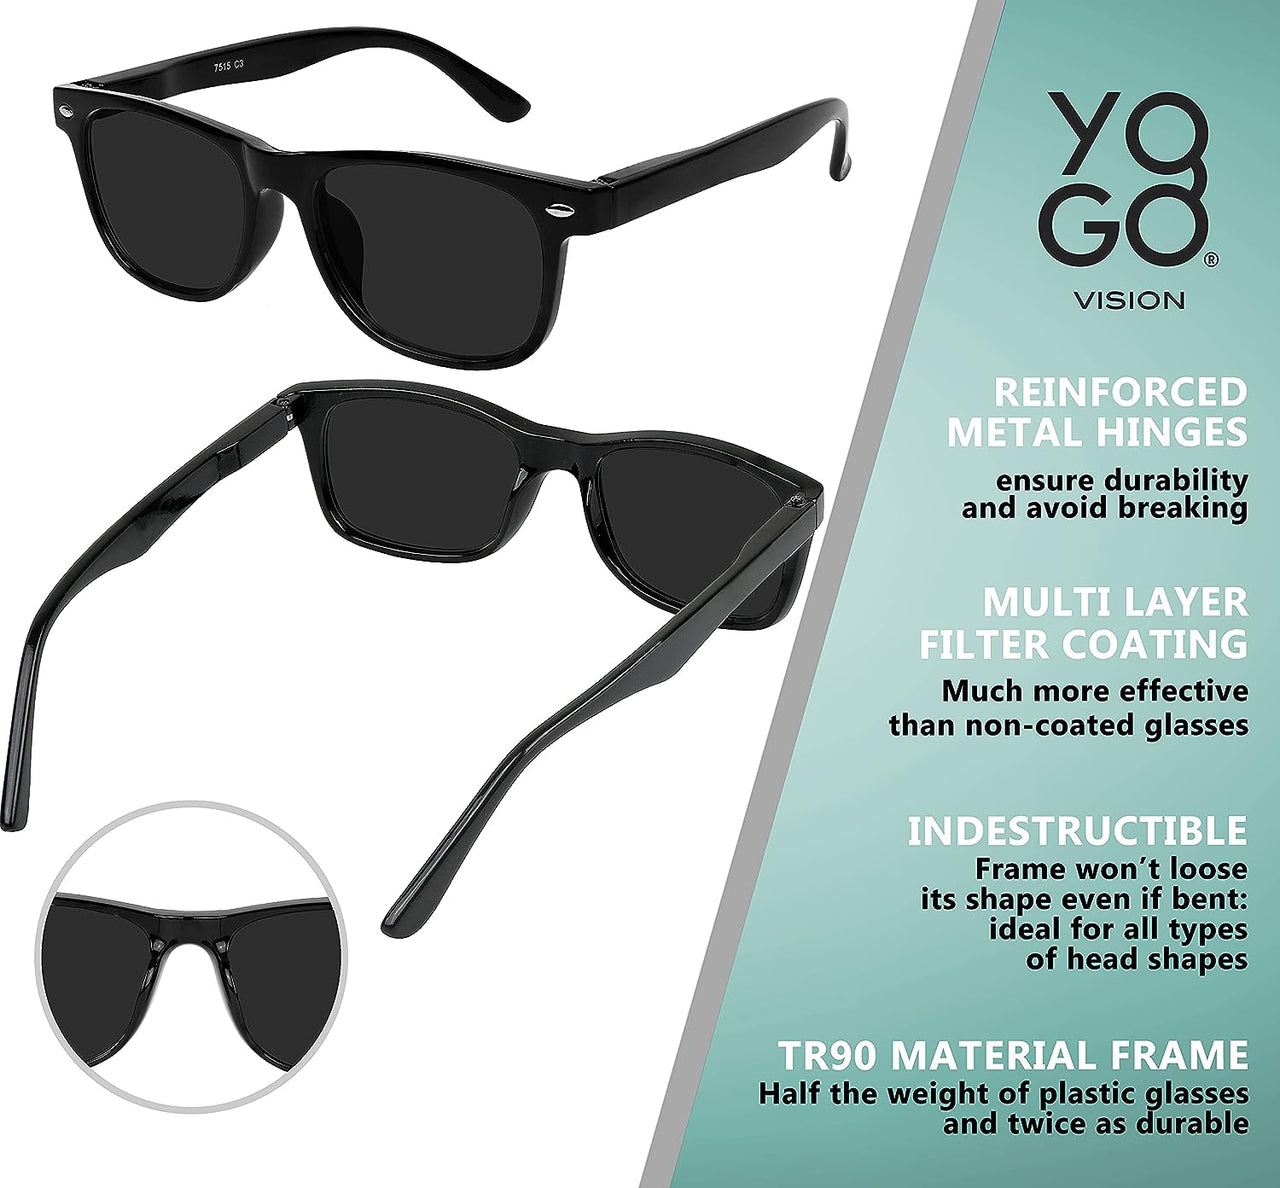 Yogo Vision Sunglasses For Boys & Girls Assortment